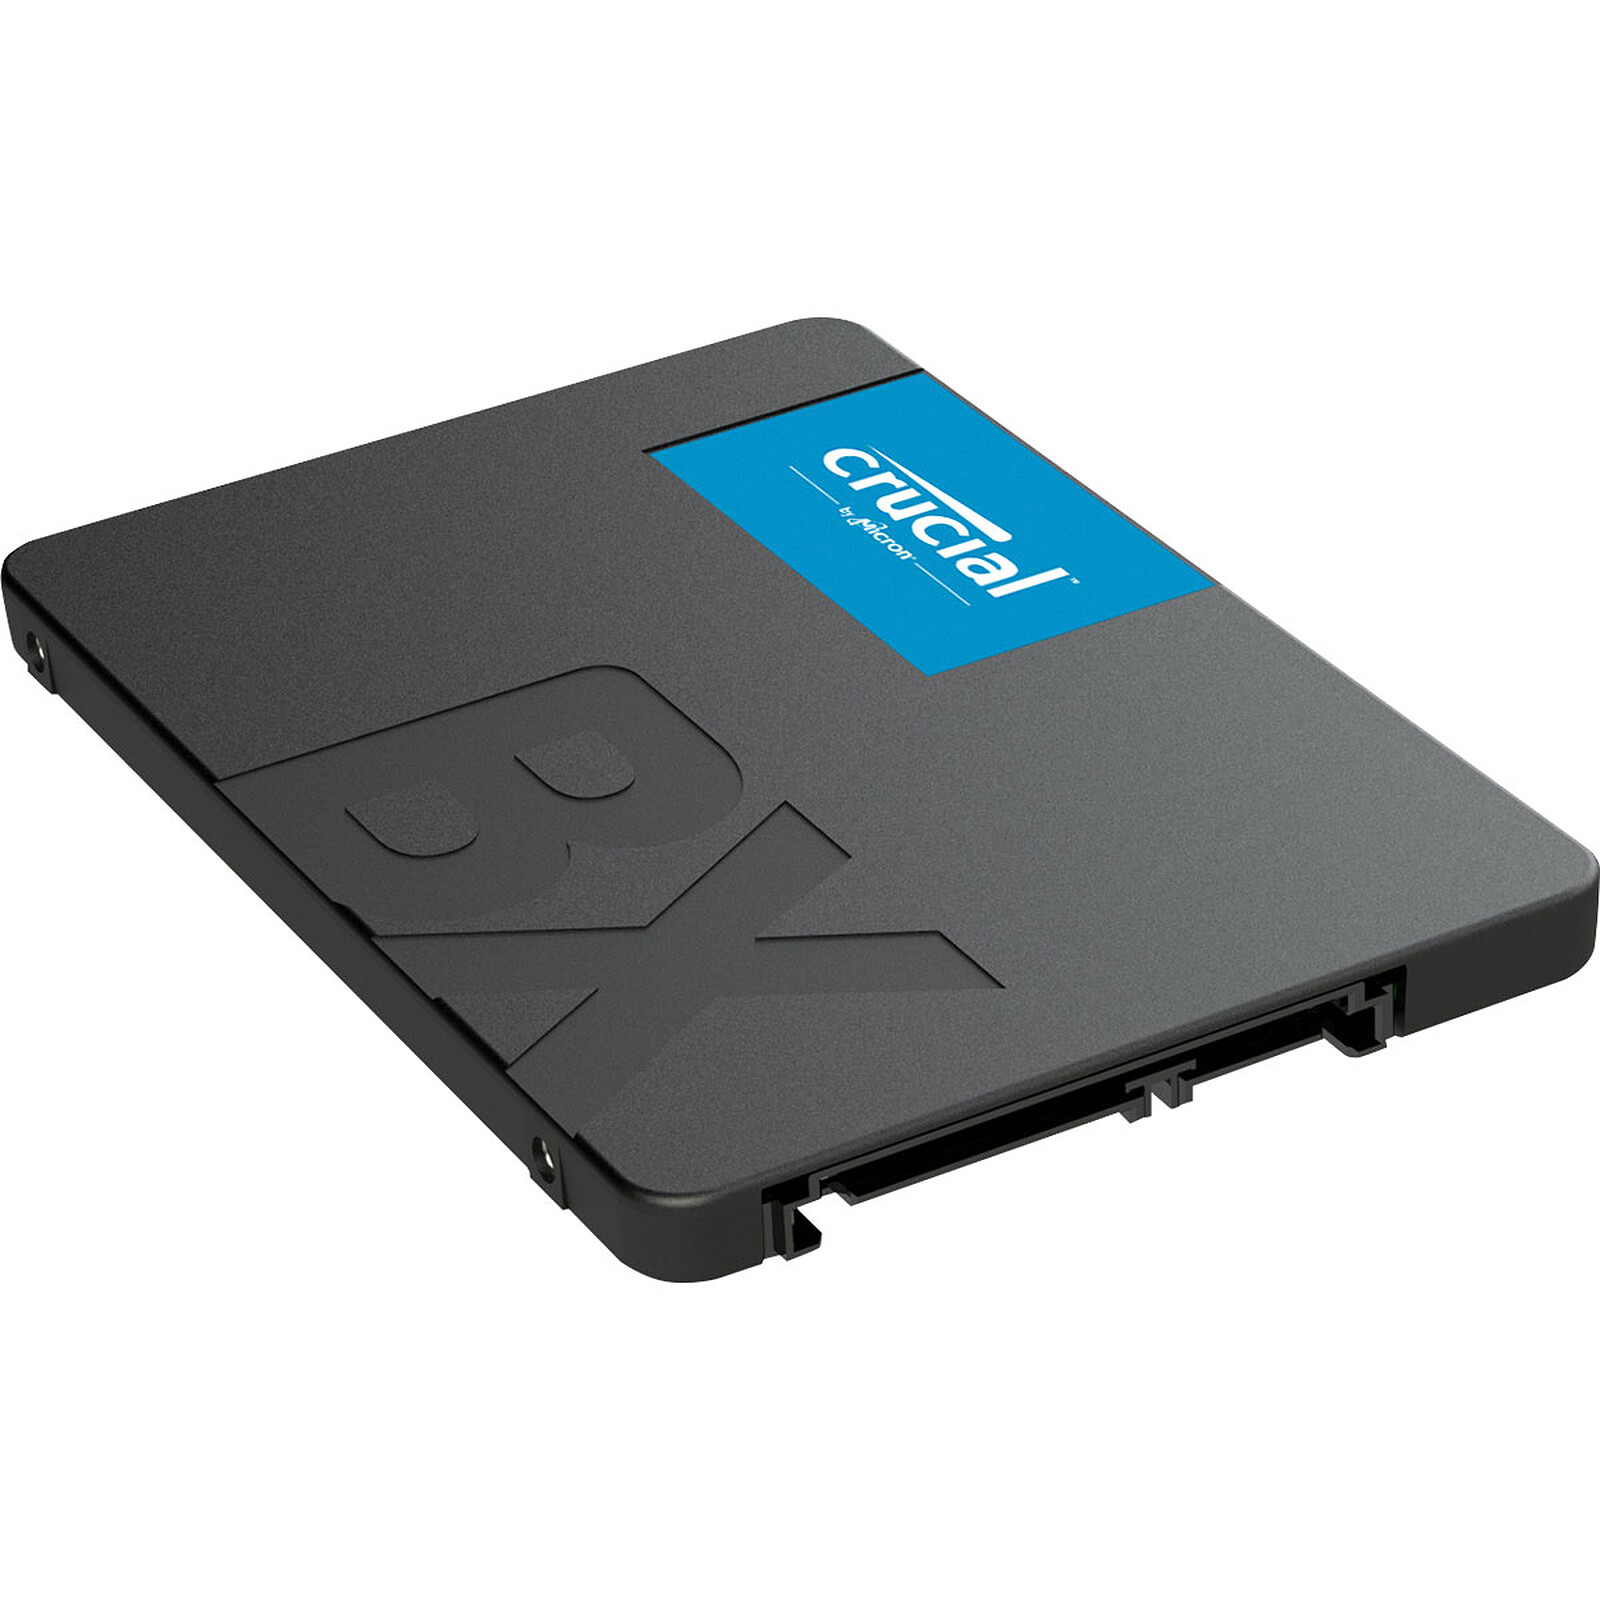 Crucial – disque dur interne SSD MX500, 250 go, 500 go, 1000 go